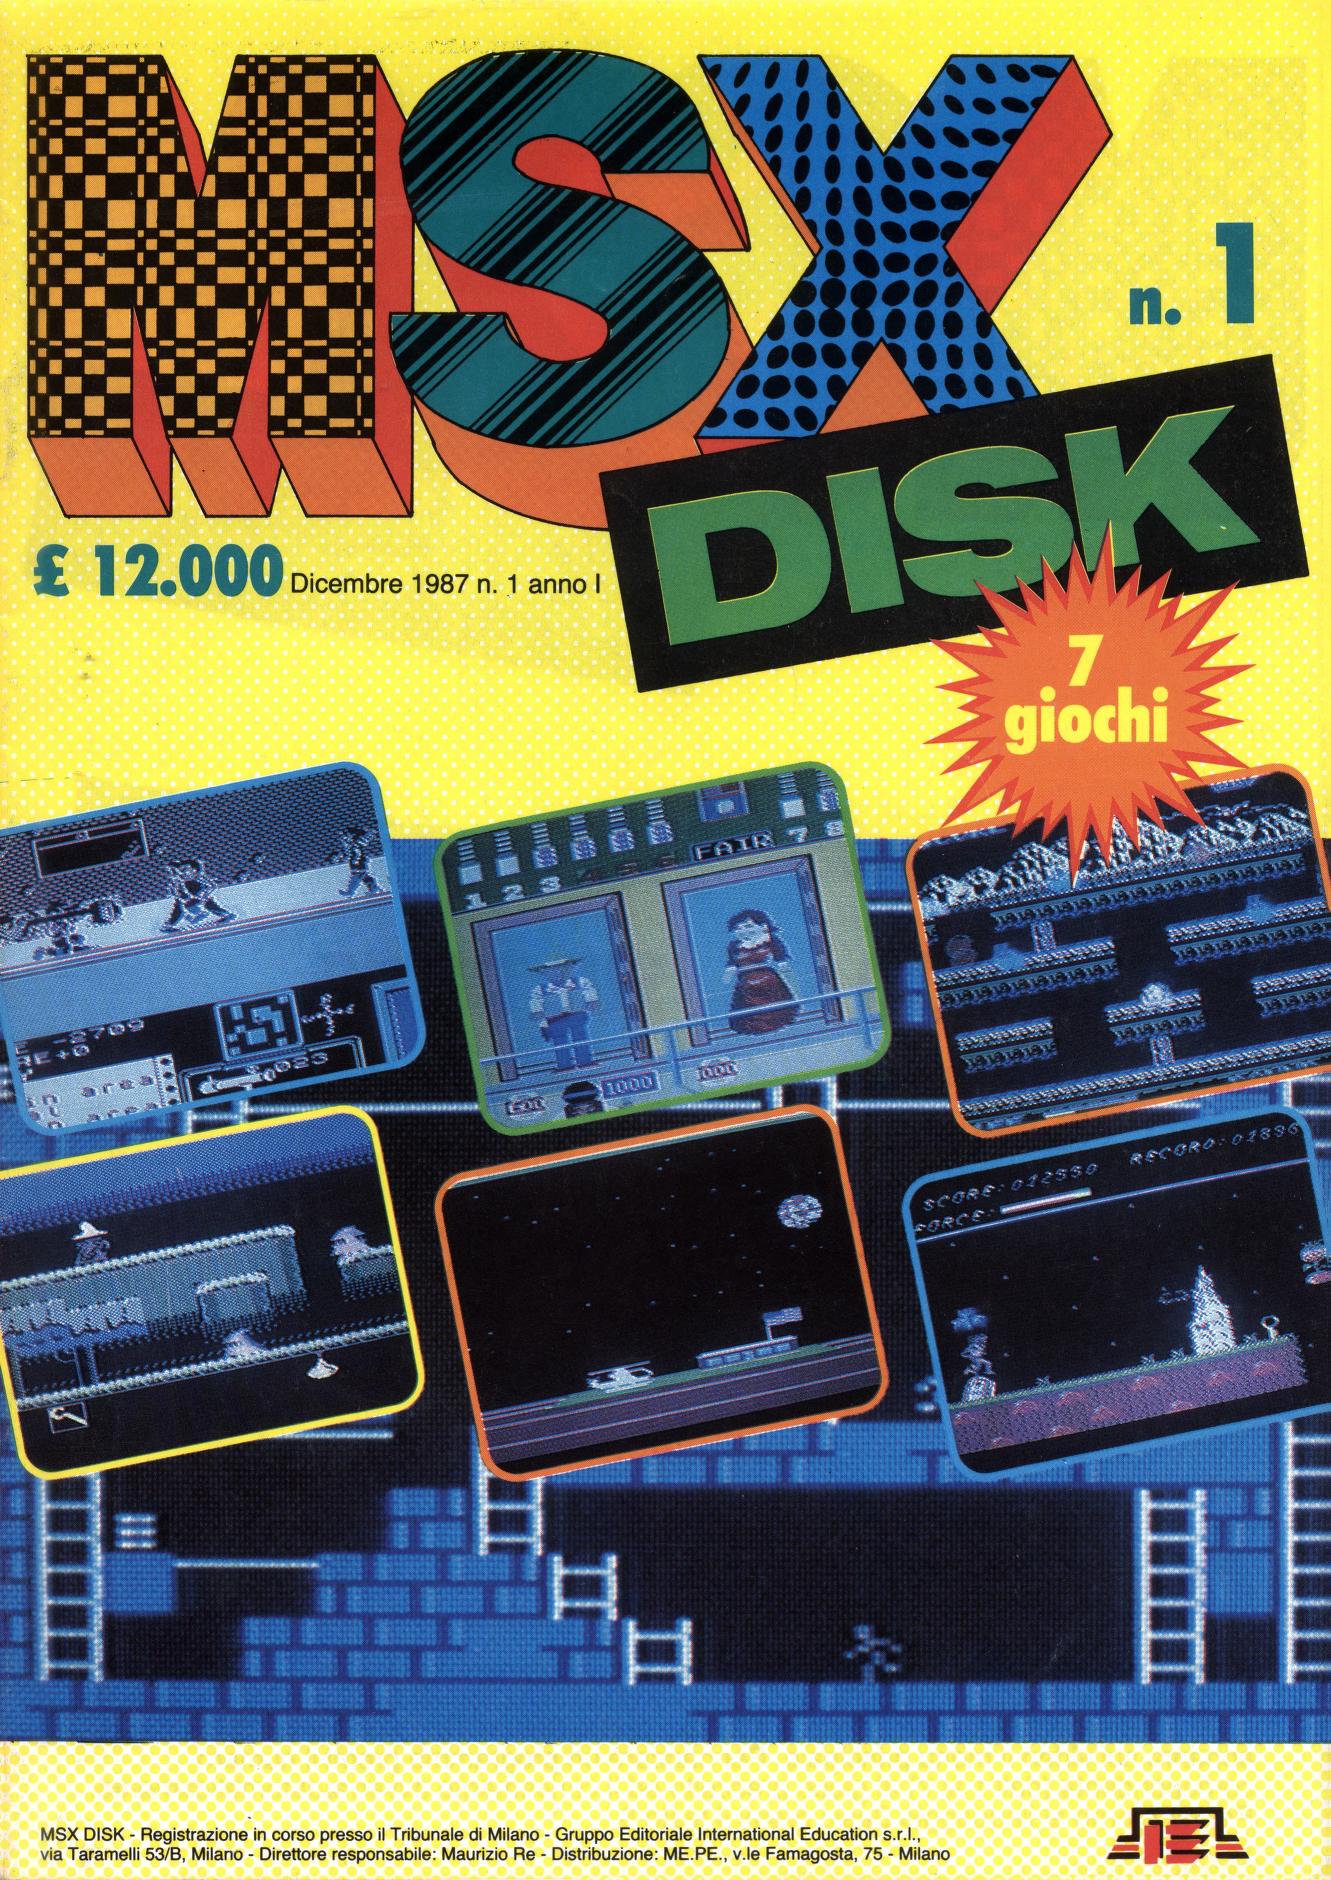 VHDpc サンダーストーム MSX ビデオディスク - tischlereigruber.at